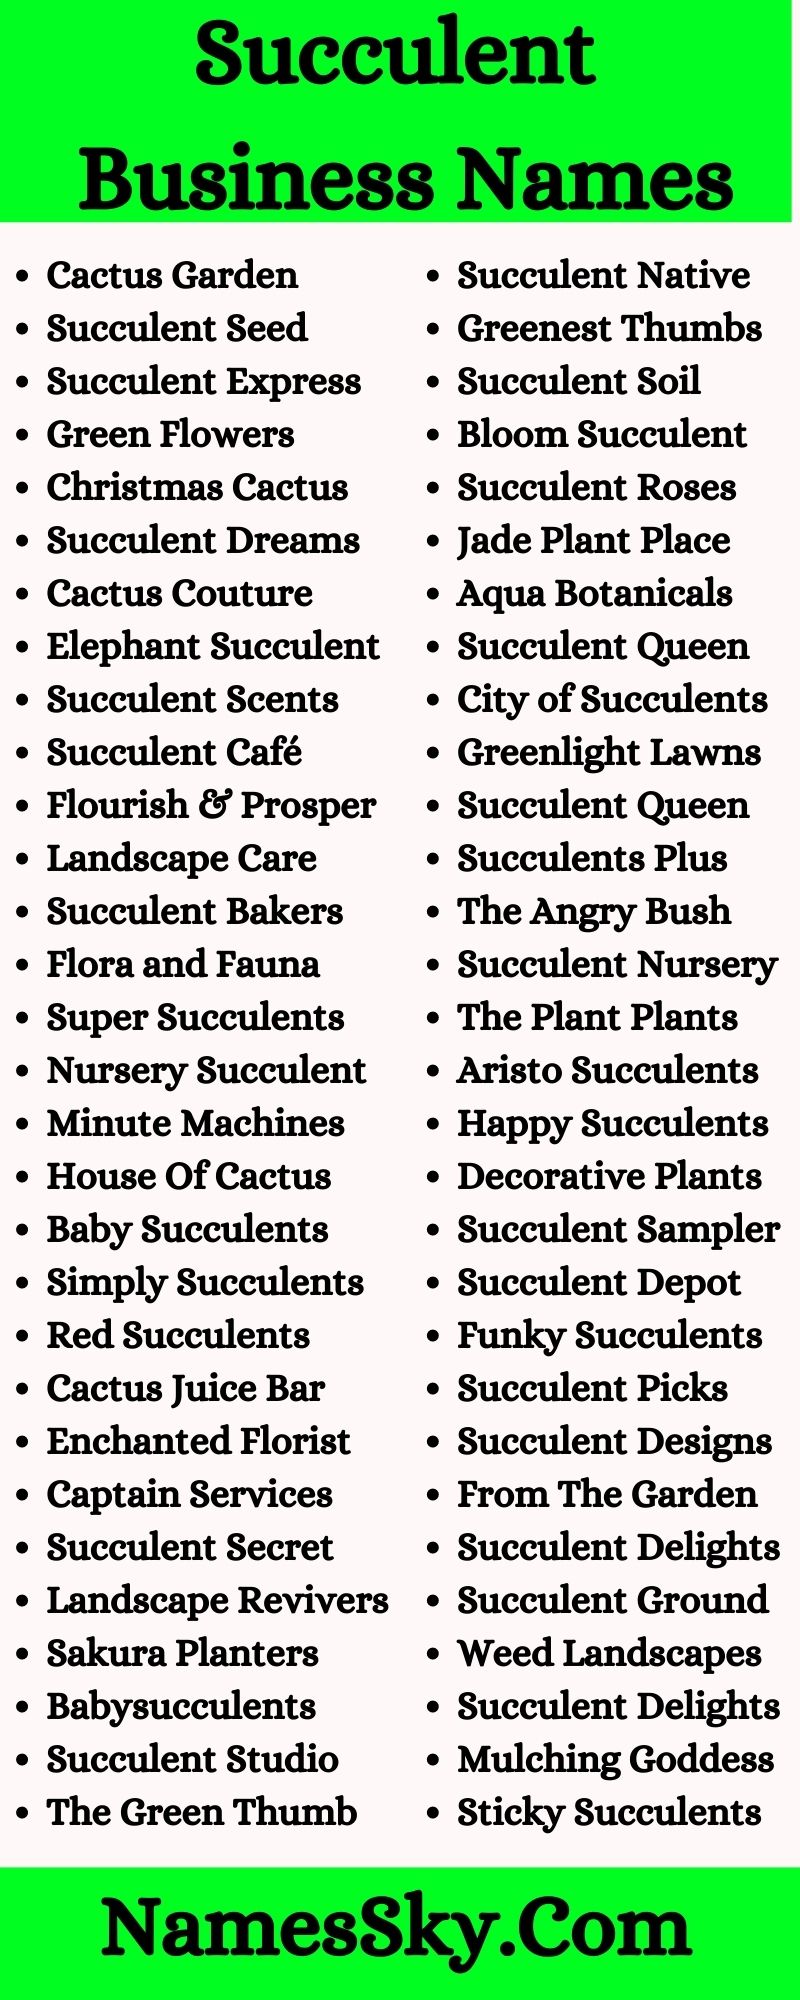 Succulent Business Names